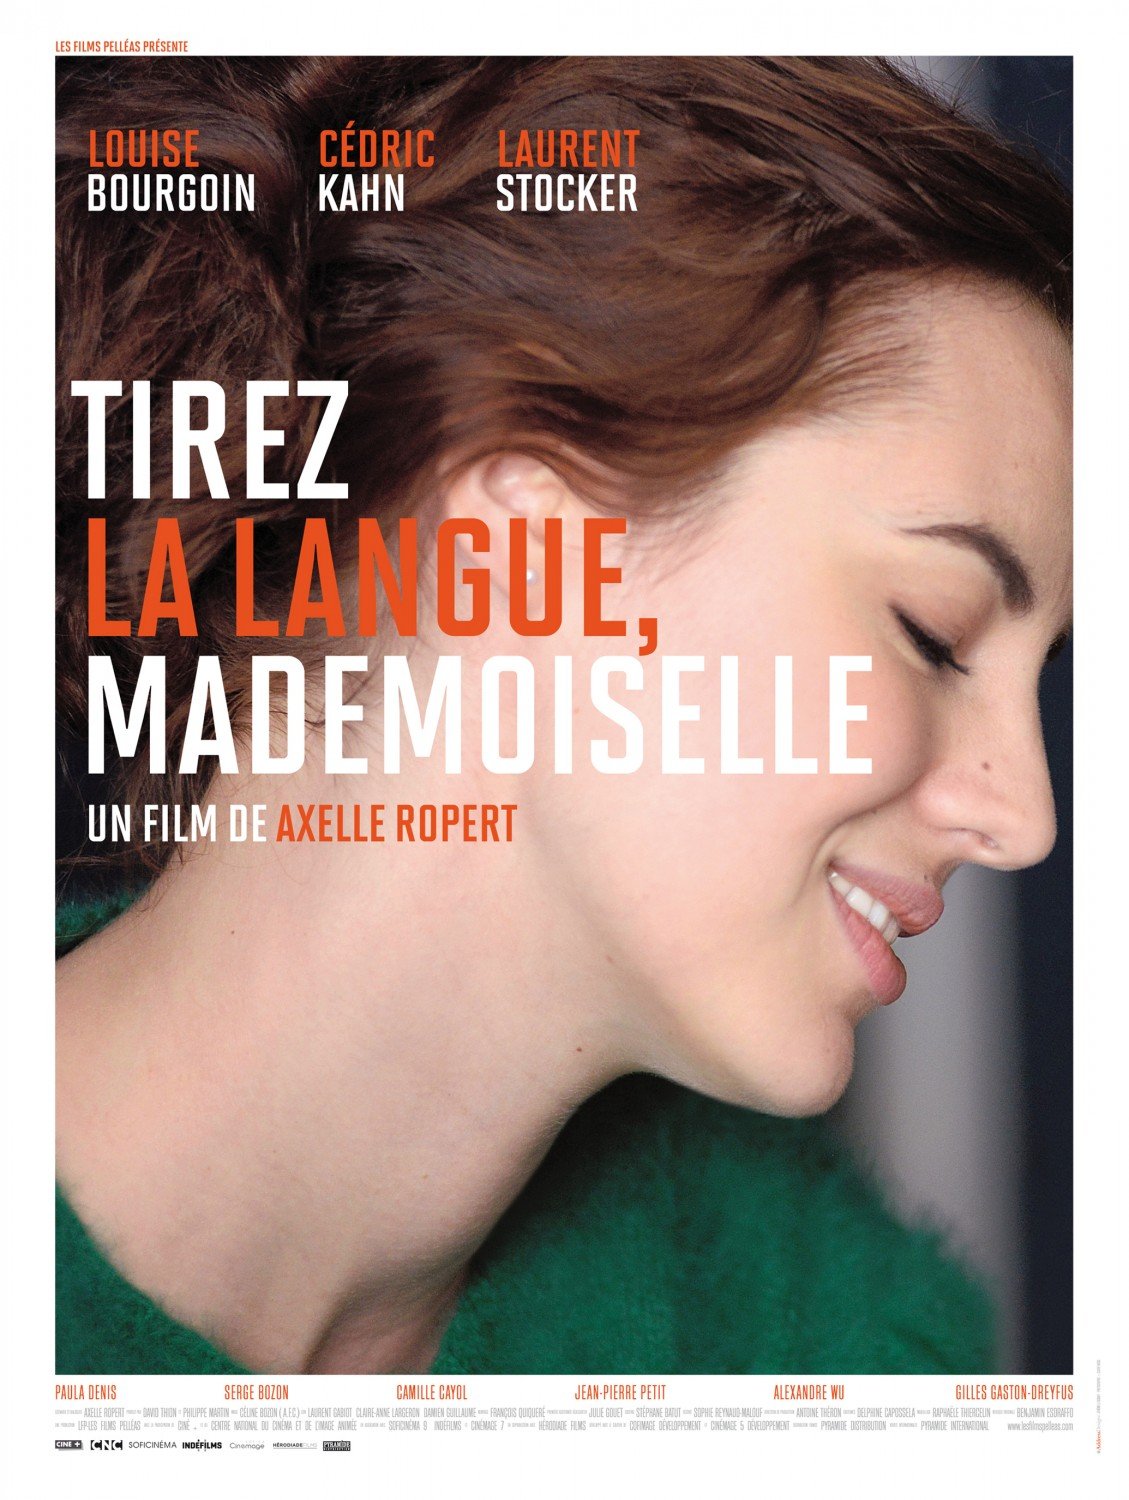 Poster of the movie Tirez la langue, mademoiselle